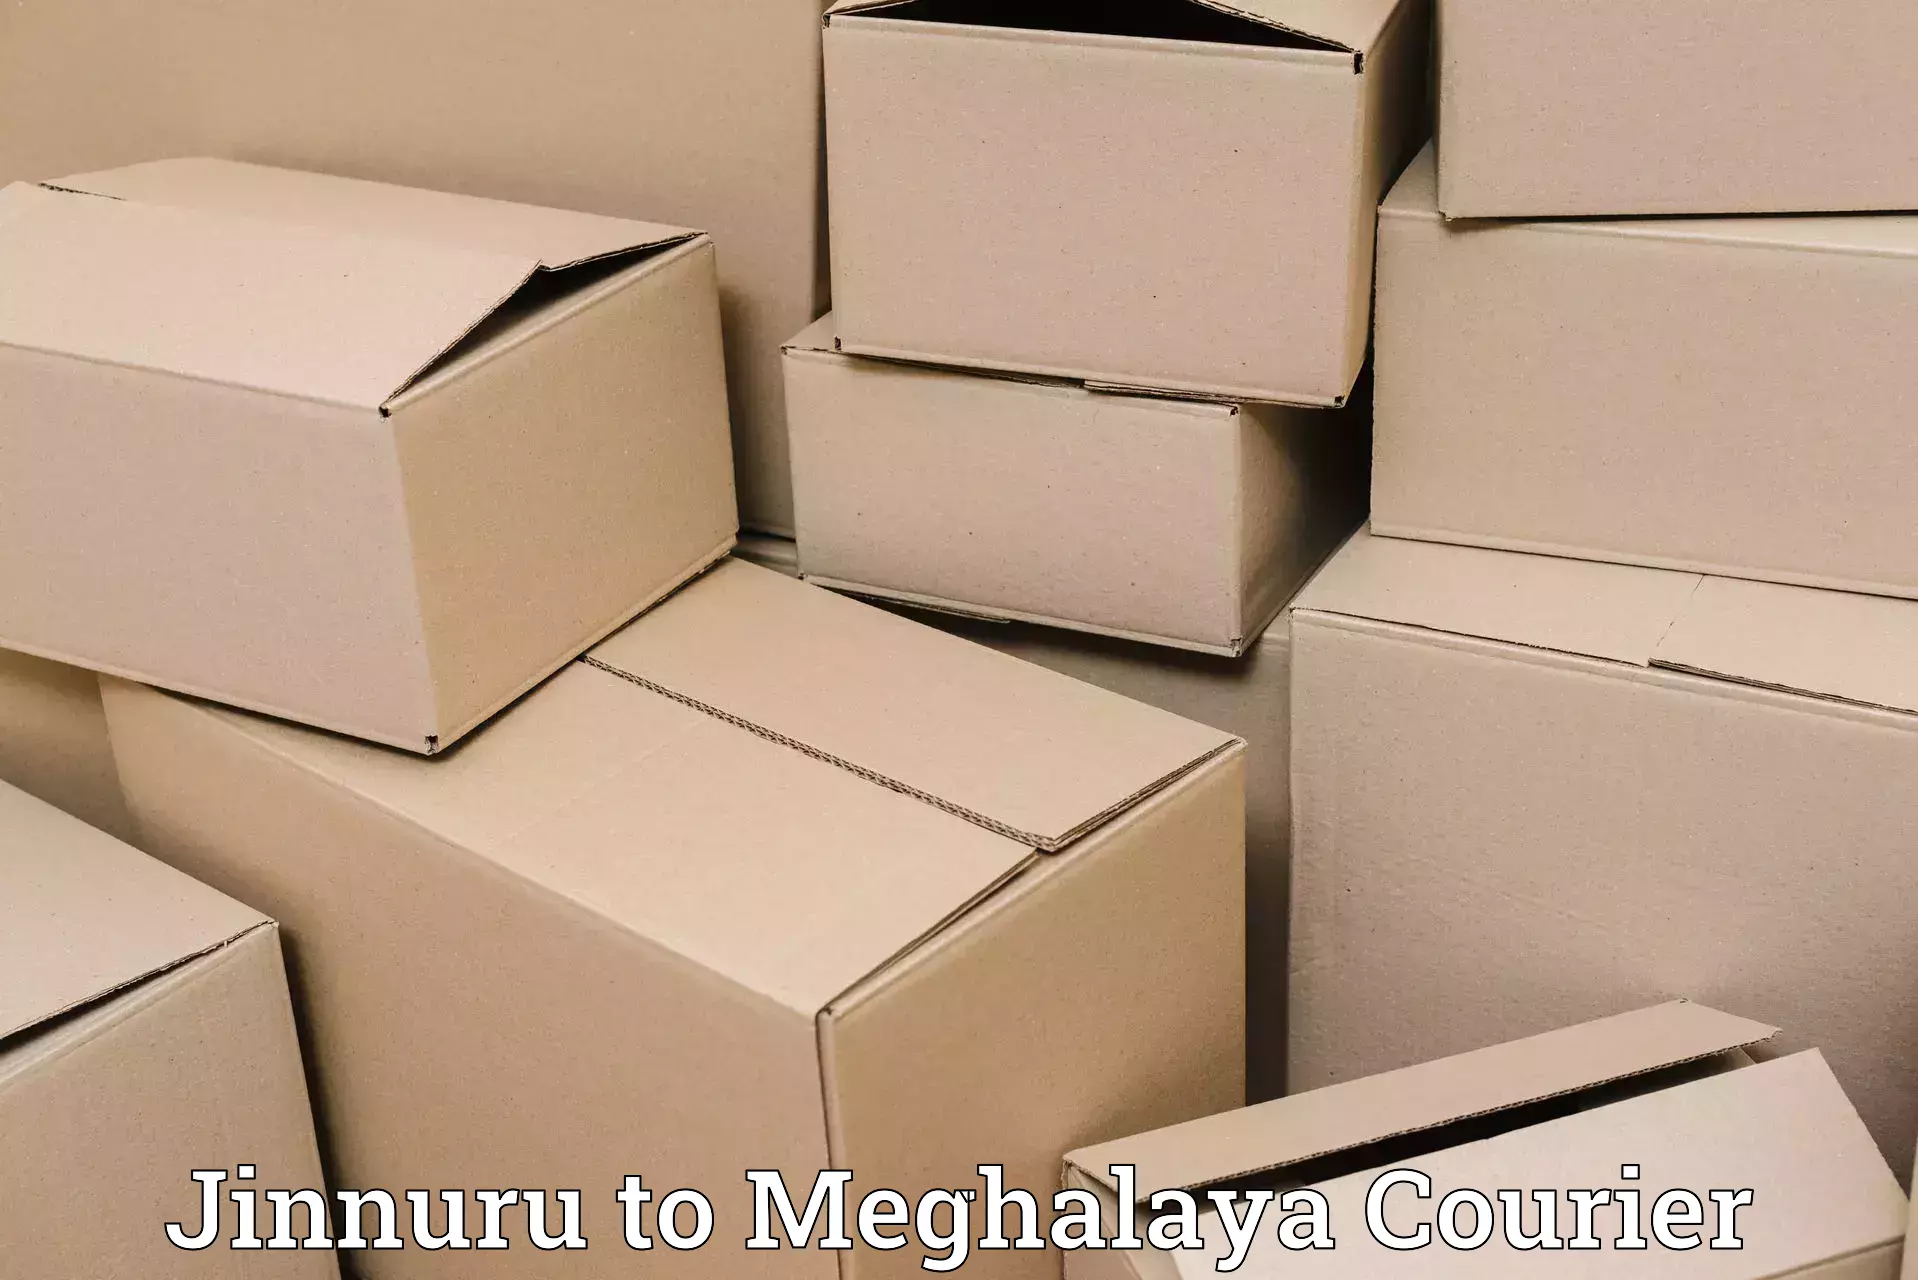 End-to-end delivery Jinnuru to Cherrapunji